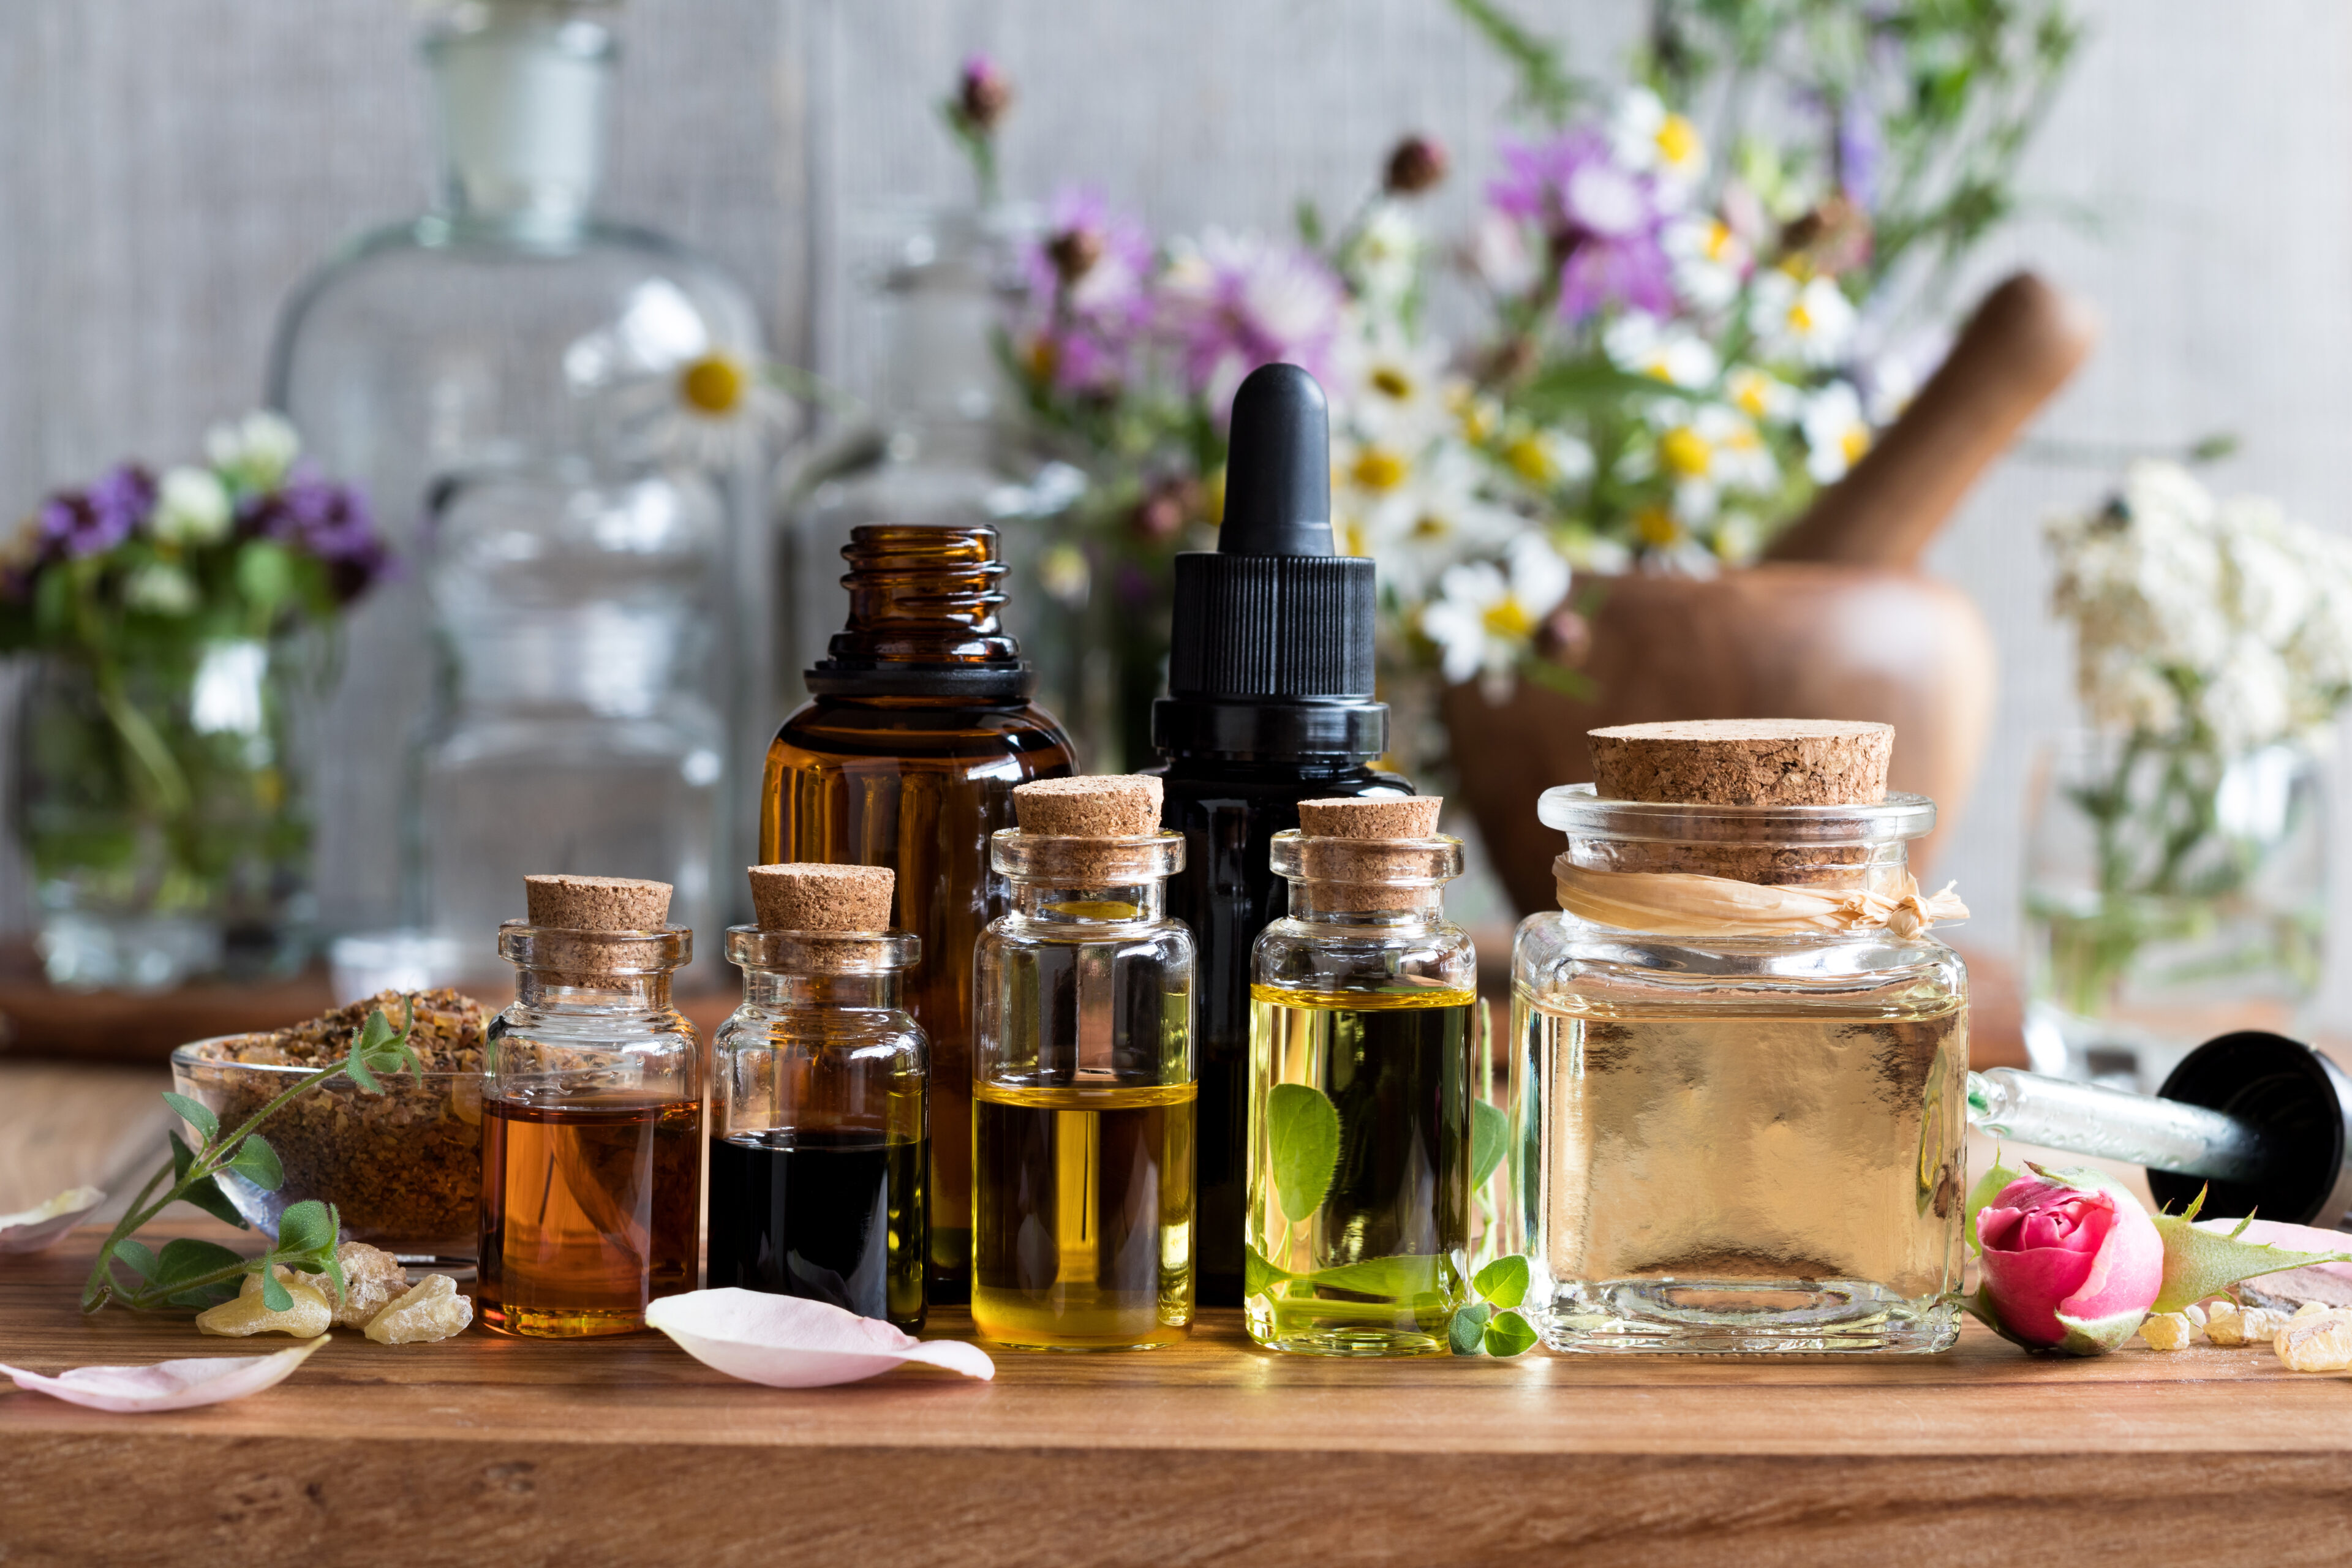 Use essential oils - Nature’s healing elixir